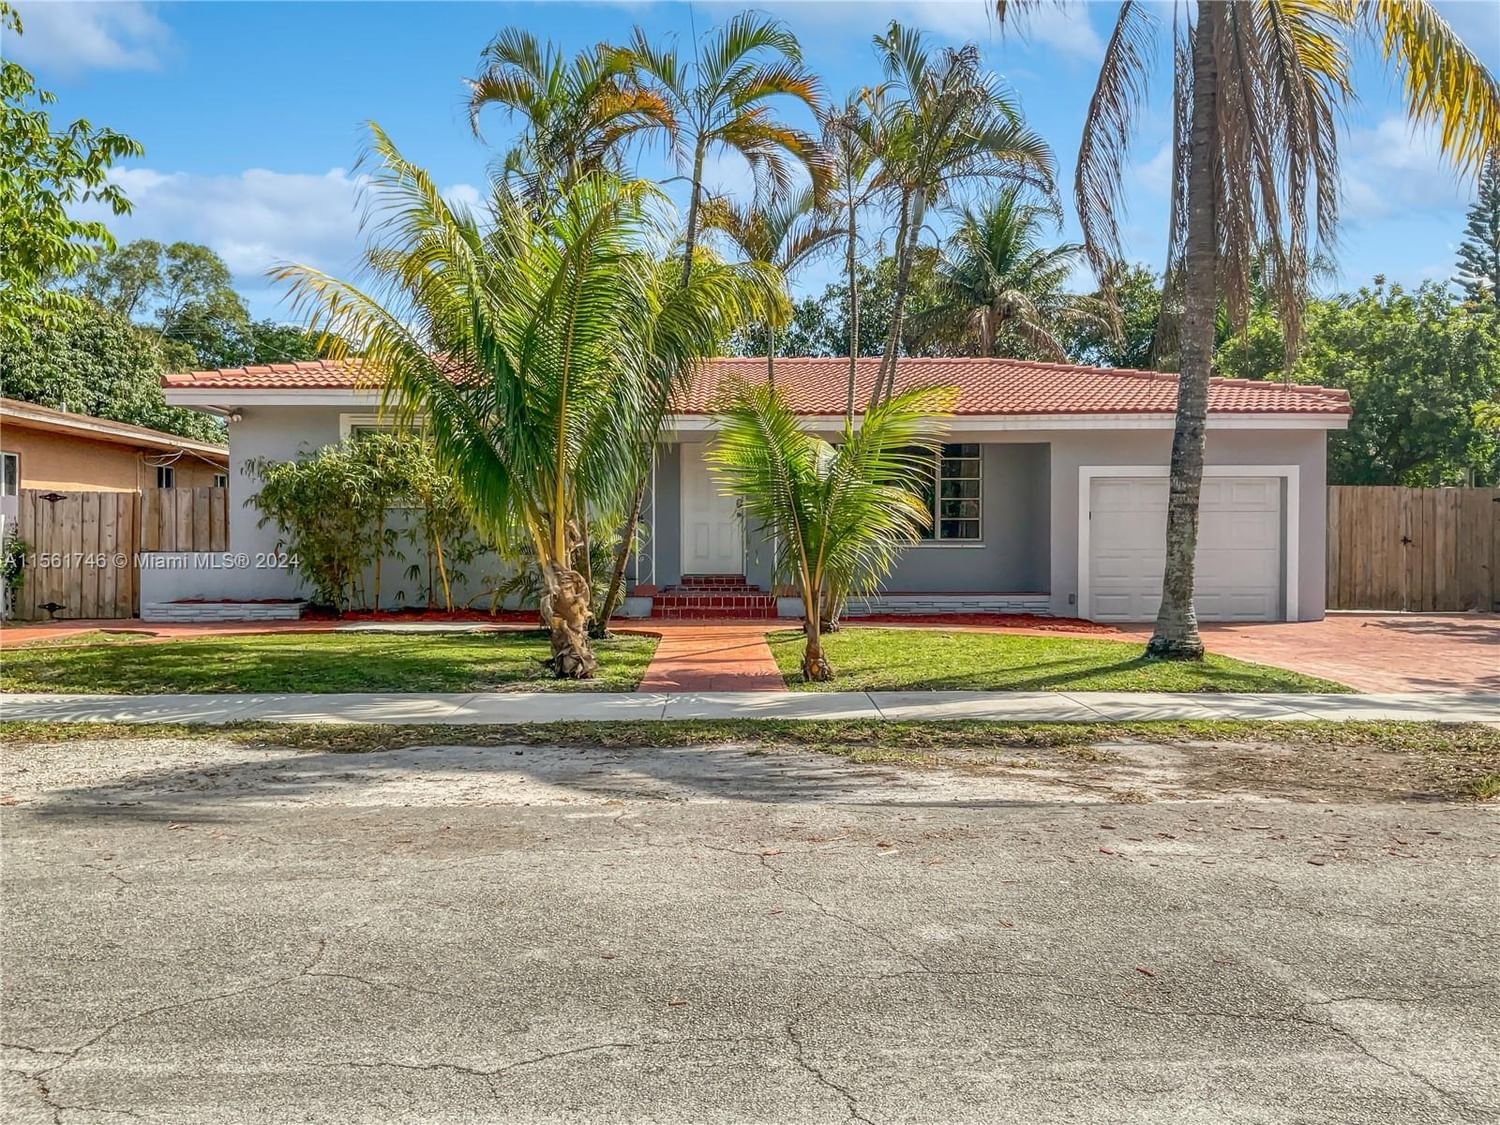 Real estate property located at 172 116th St, Miami-Dade County, PROSPECT PARK, Miami, FL